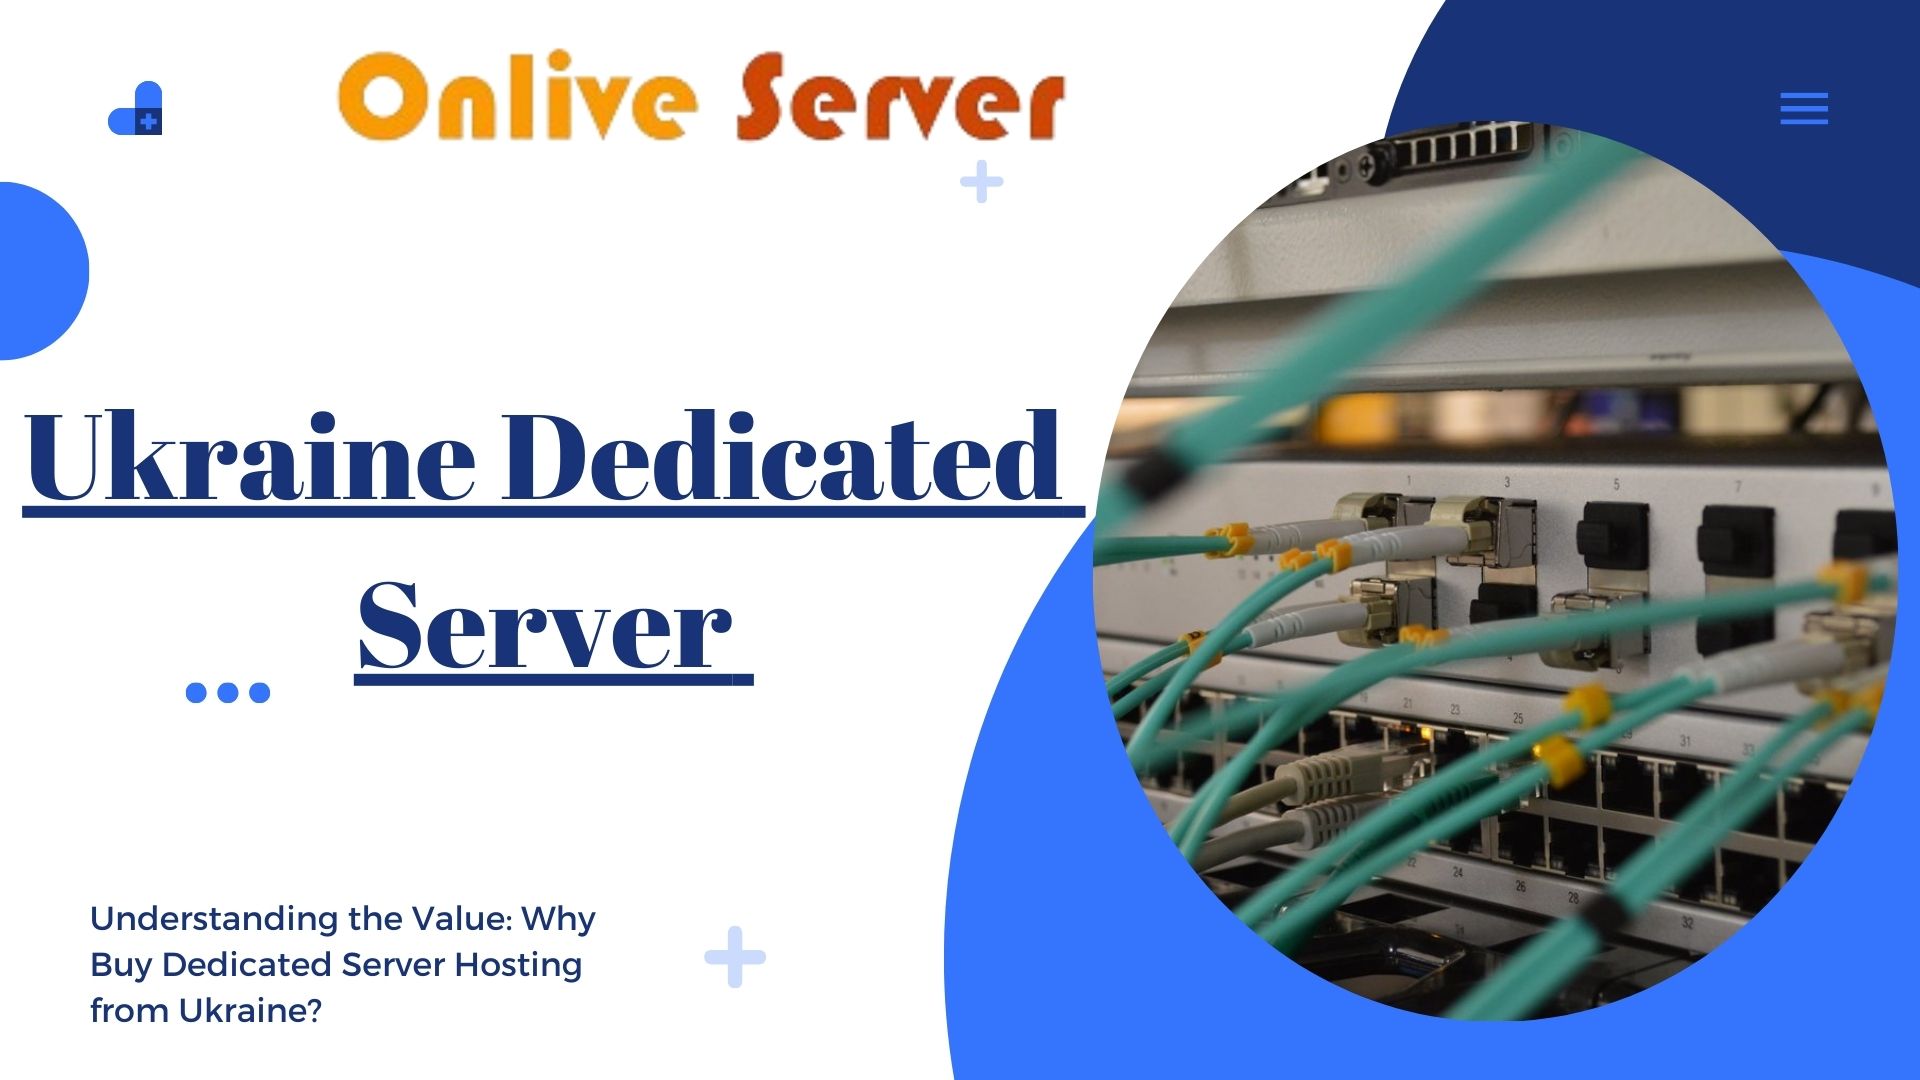 Understanding the Value: Why Buy Dedicated Server Hosting from Ukraine?